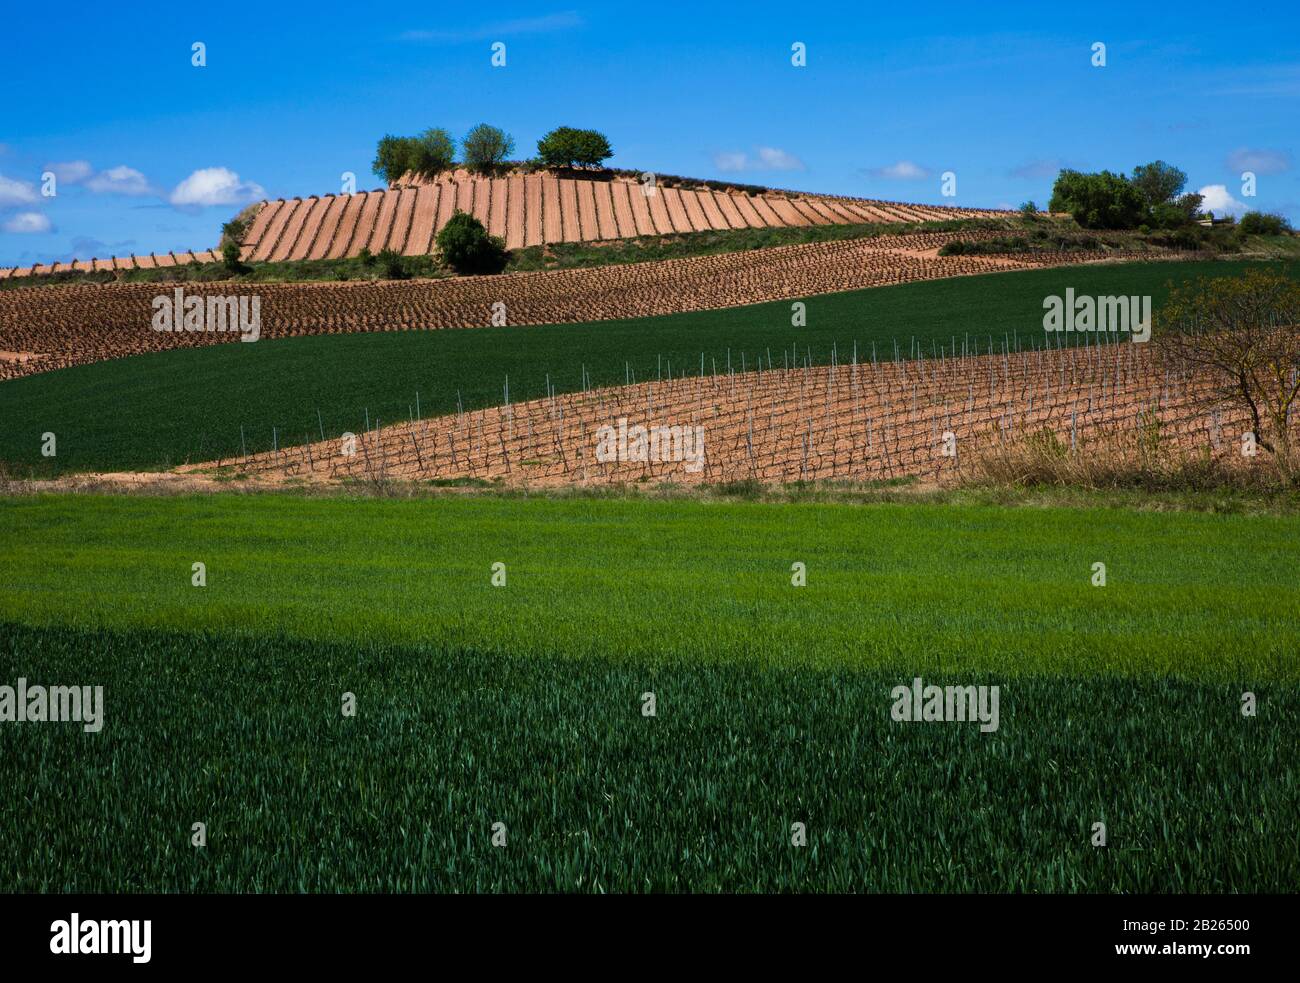 vineyard at glance Stock Photo